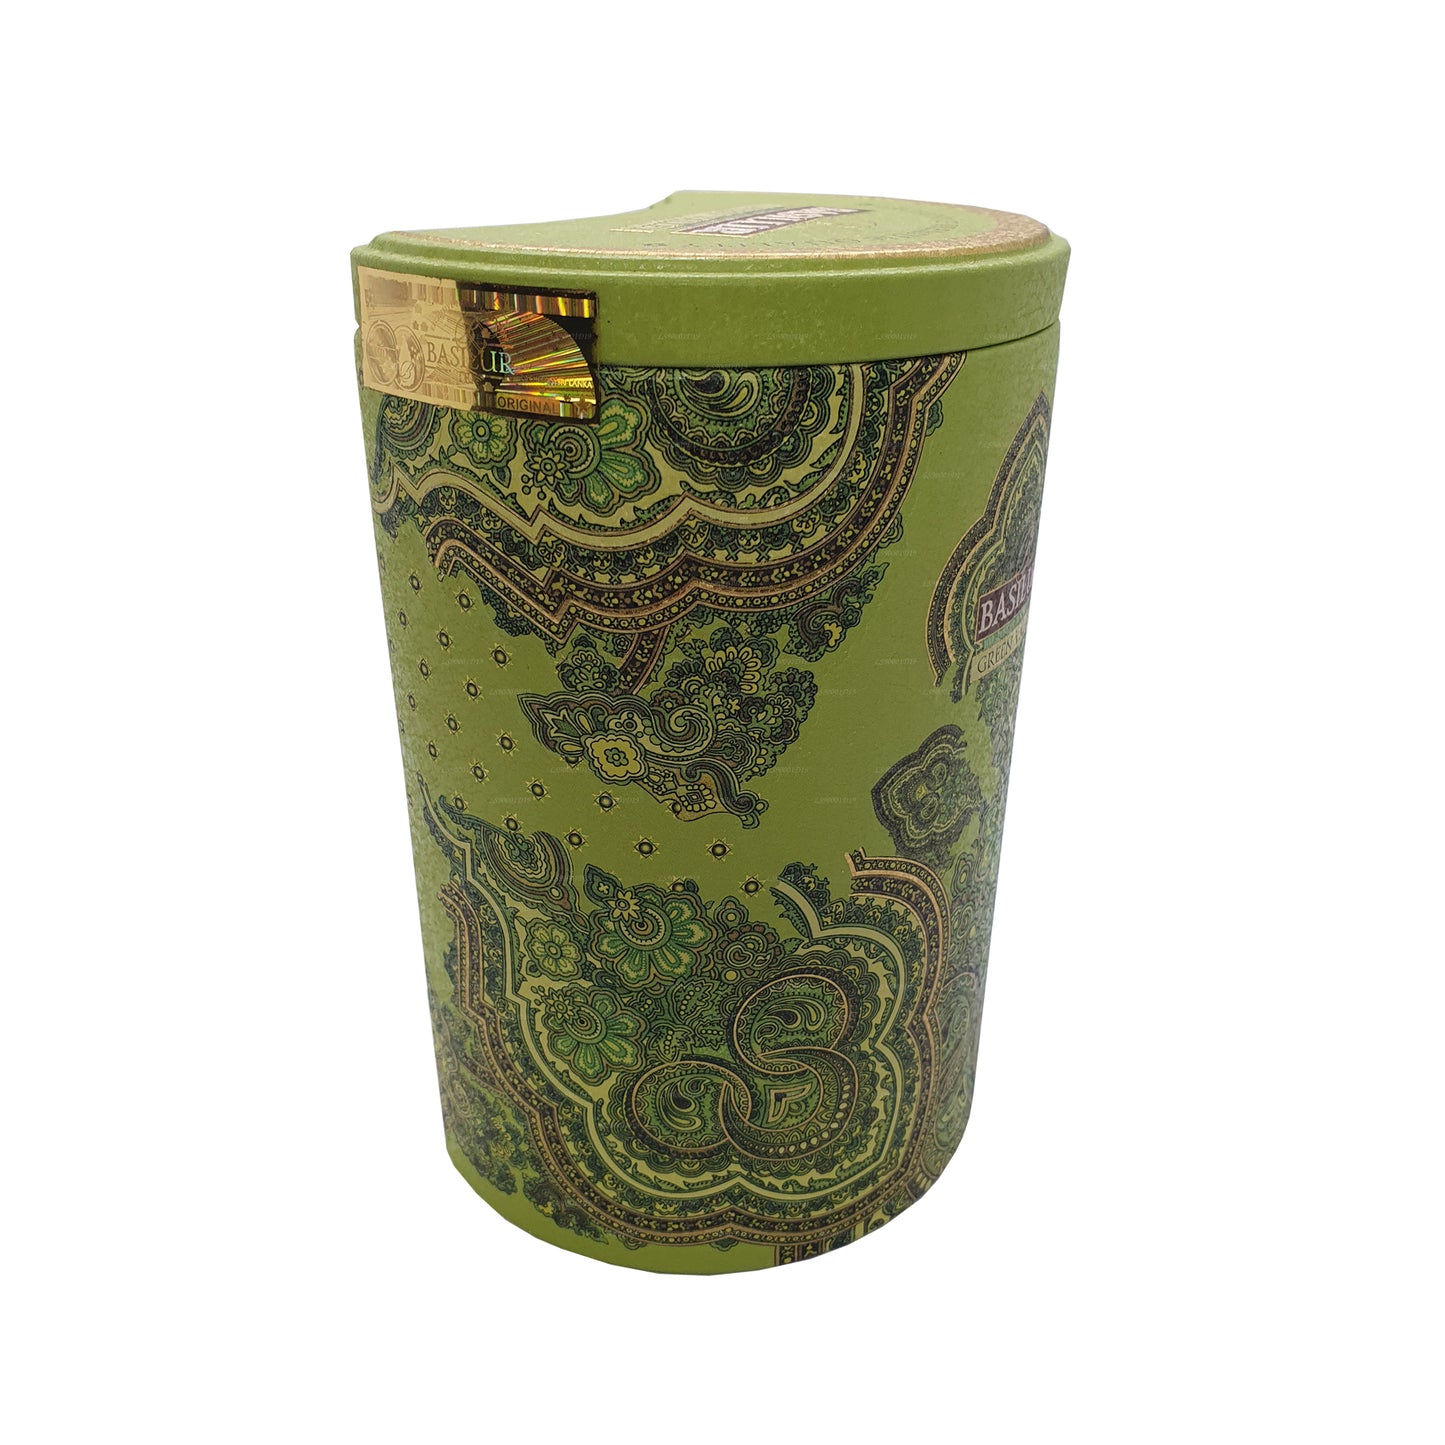 Basilur Oriental Collection Green Valley Tin Caddy (100g)